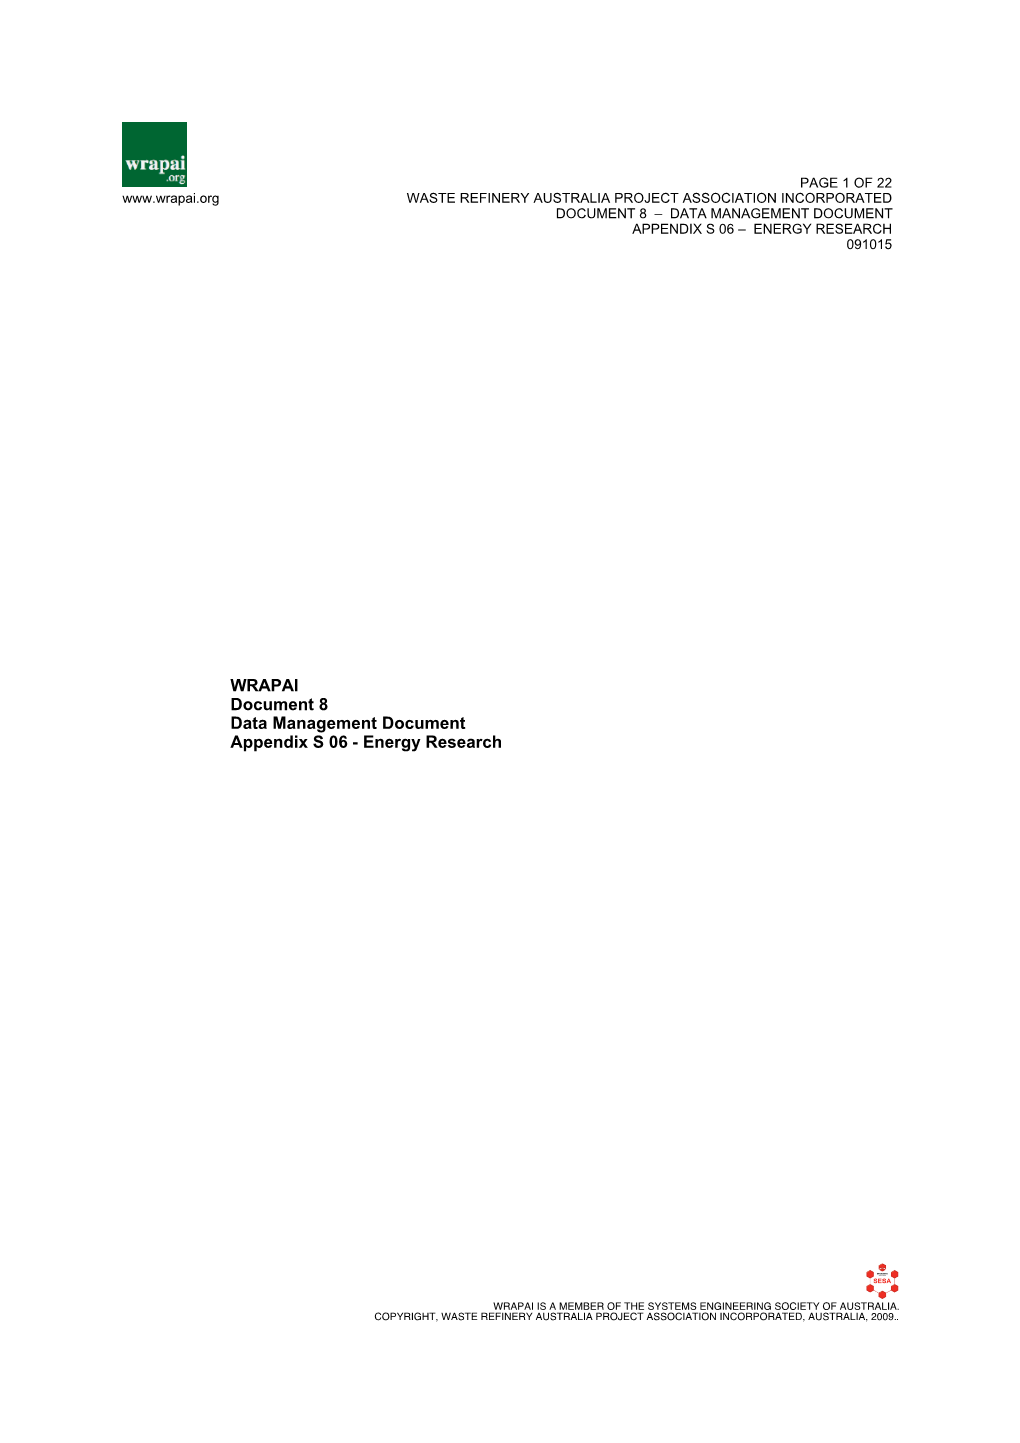 WRAPAI Document 8 Data Management Document Appendix S 06 - Energy Research